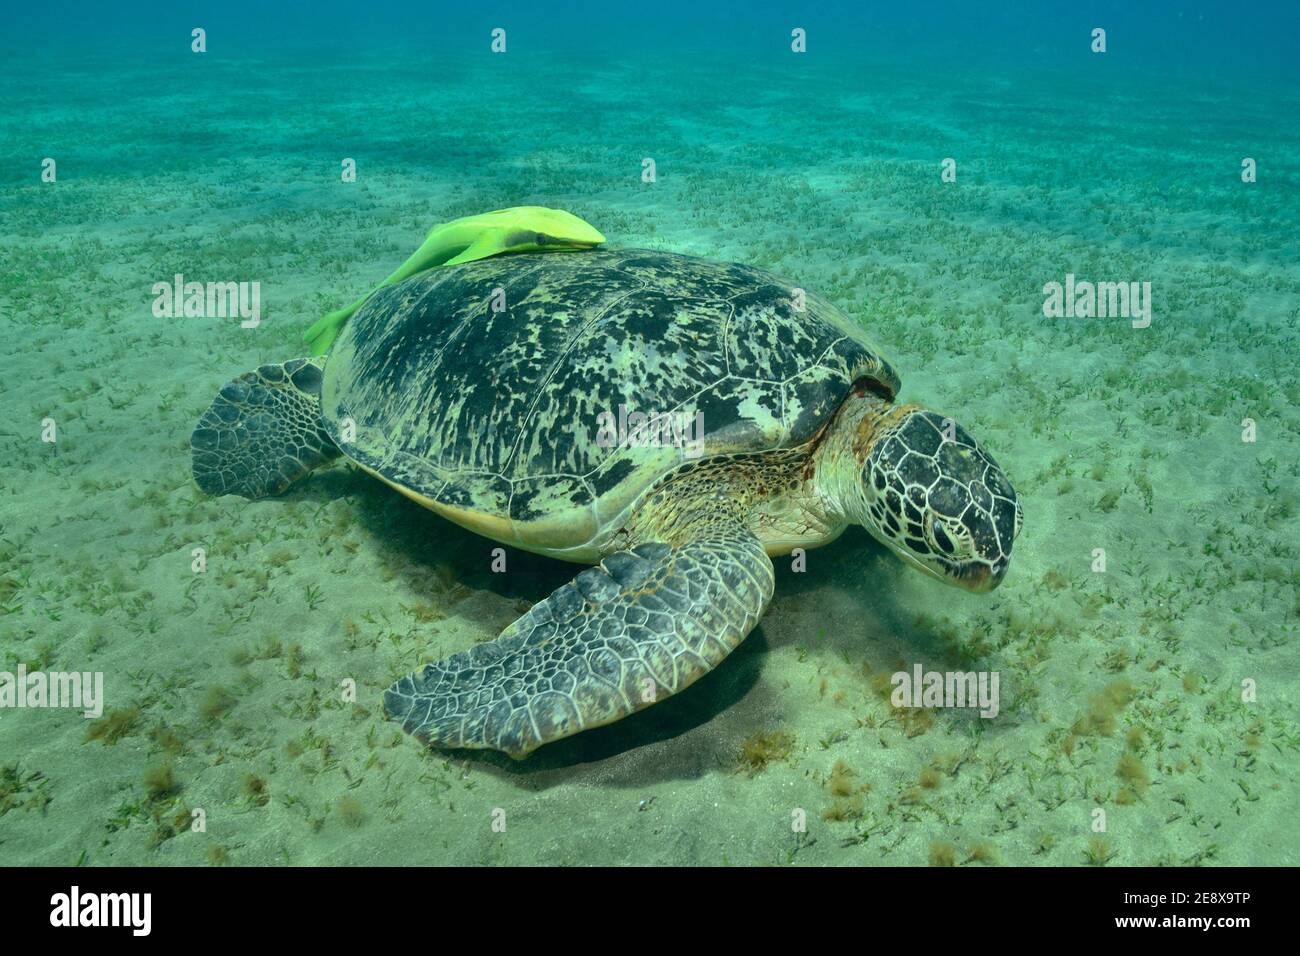 Chelonia mydas, Grüne Meeresschildkröte, green sea turtle, Echeneis naucrates, suckerfish, Gestreifter Schiffshalter, Stock Photo